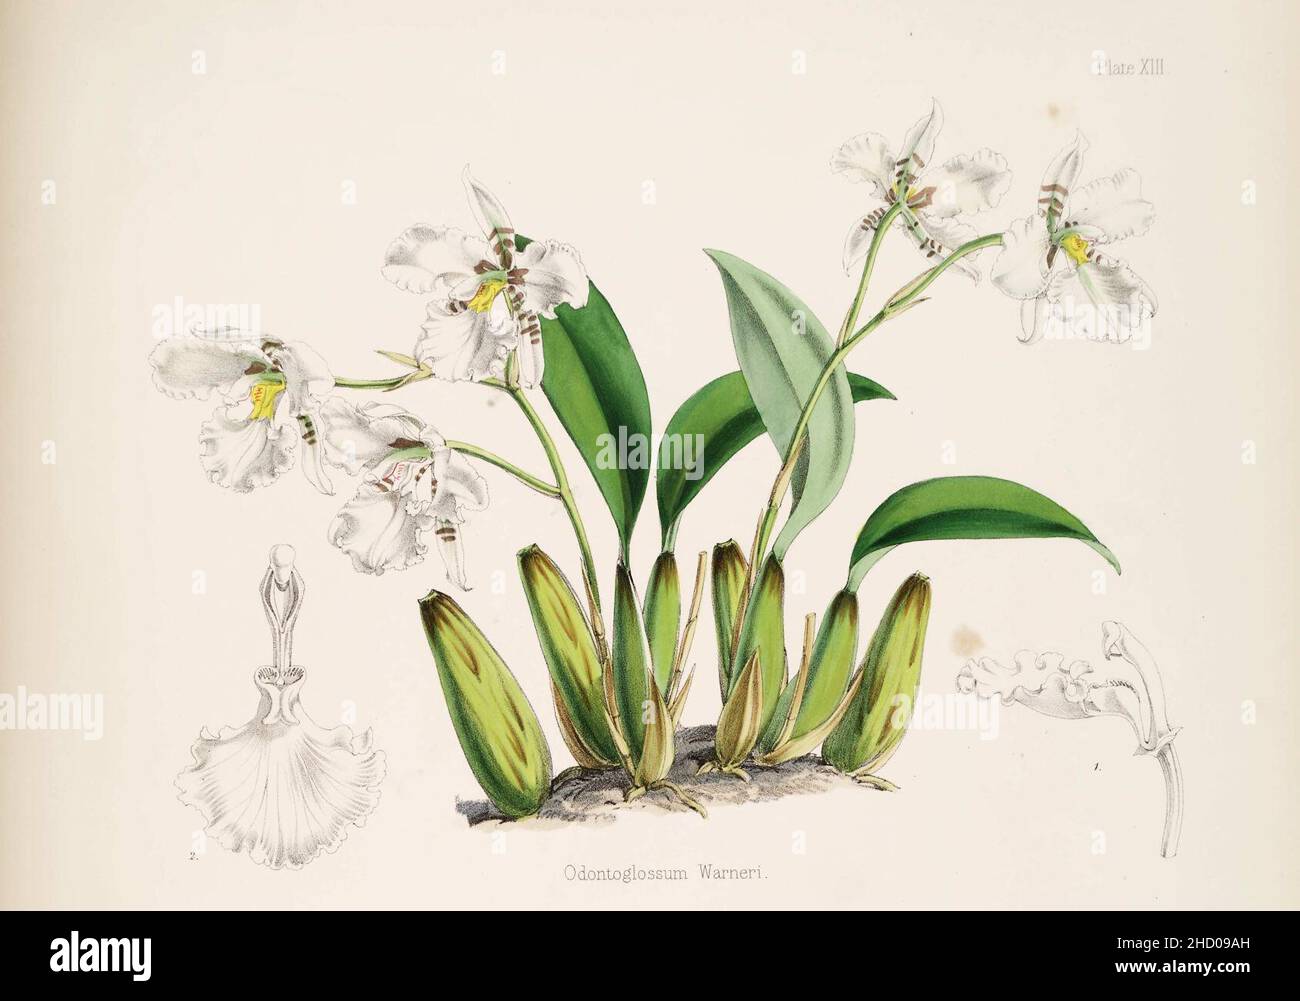 Rhynchostele rossii (as Odontoglossum warnerianum) - pl. 13, upper fig. - Bateman, Monogr.Odont. Stock Photo